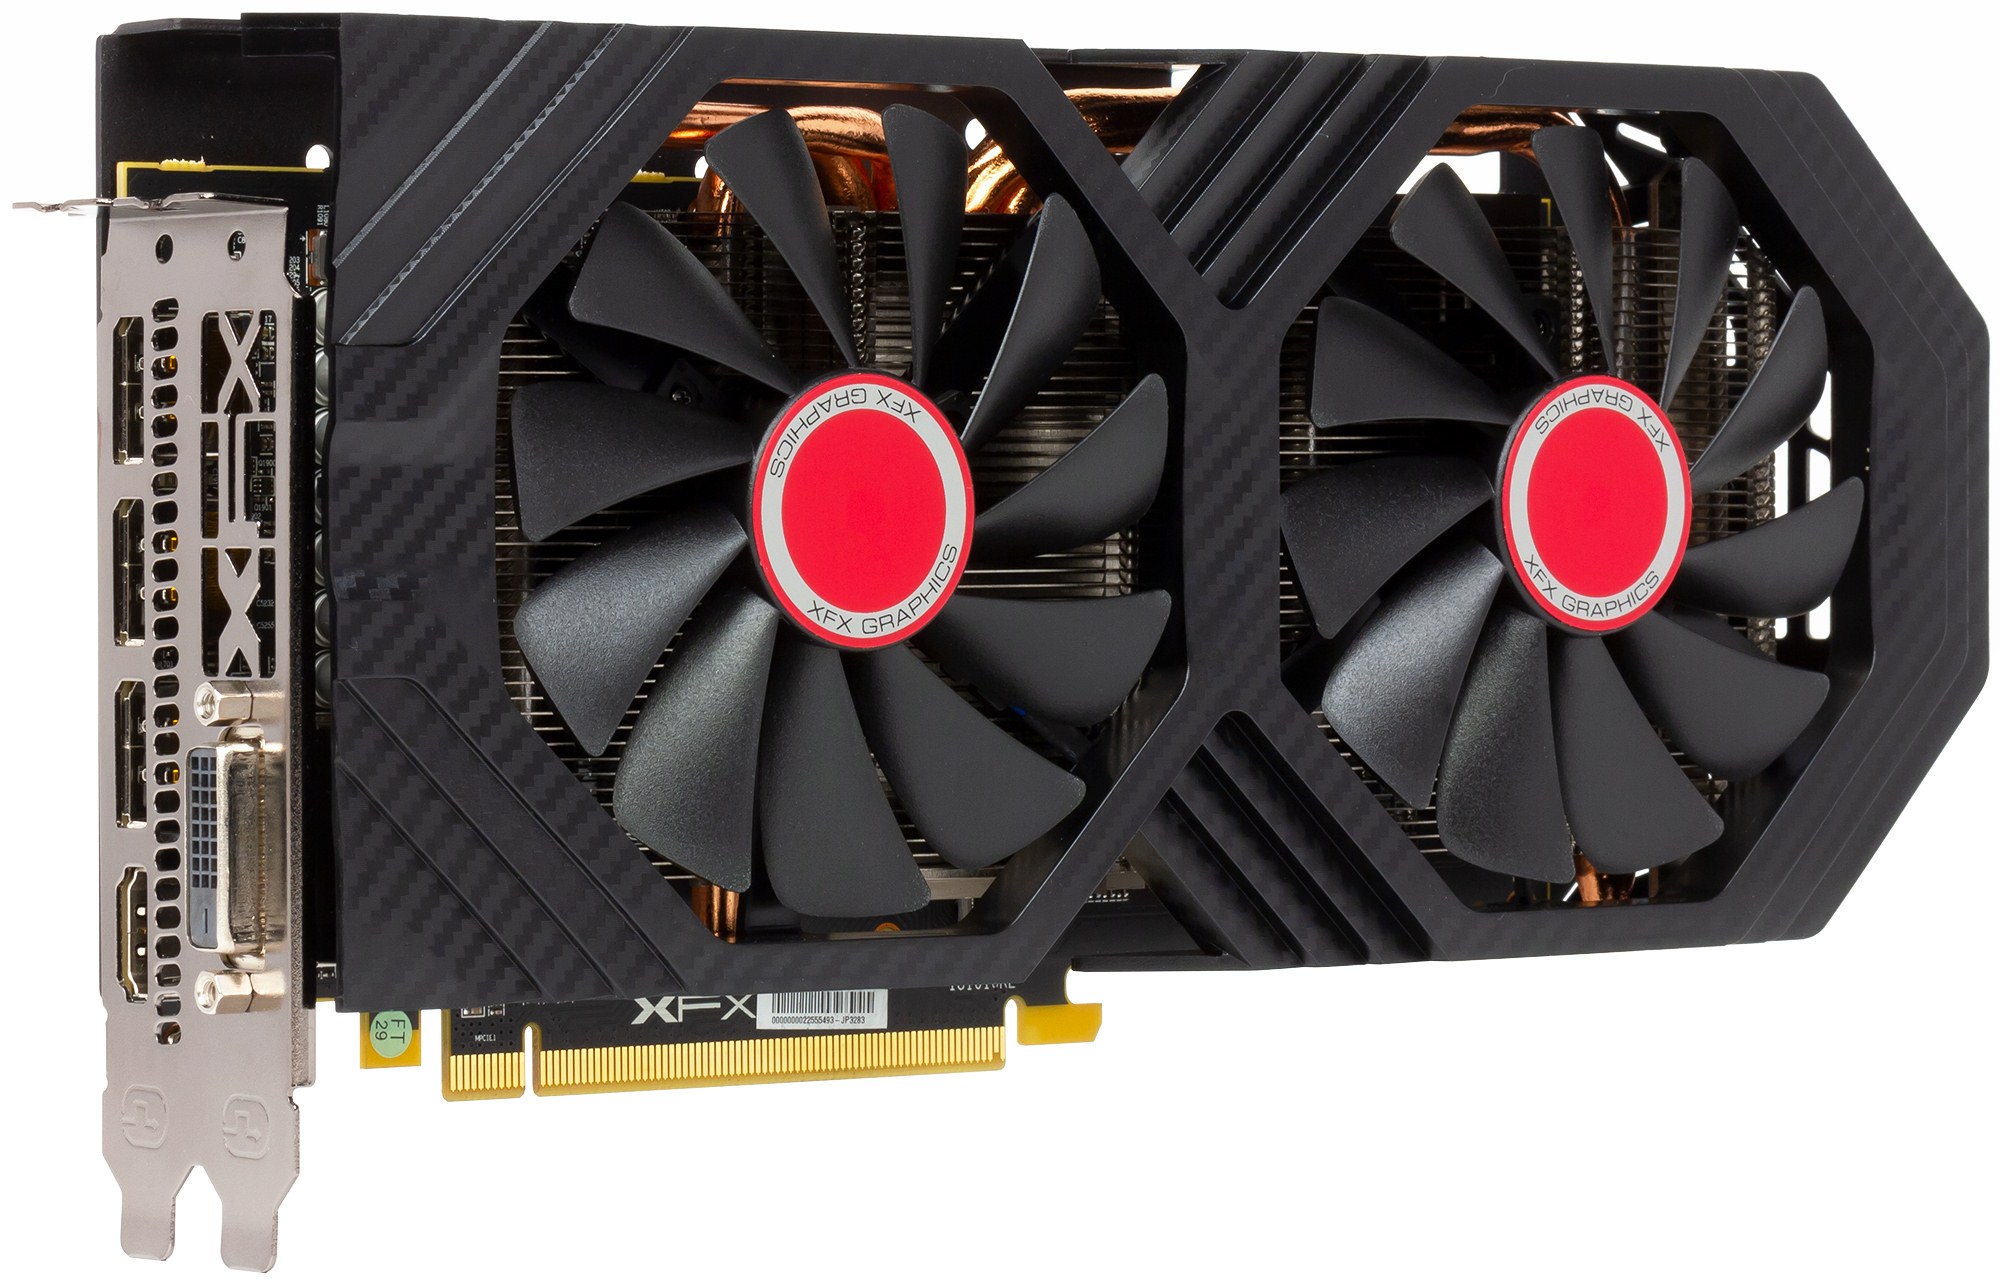 Обзор AMD Radeon RX 590: немного ускоренная версия RX 580 за ту же цену